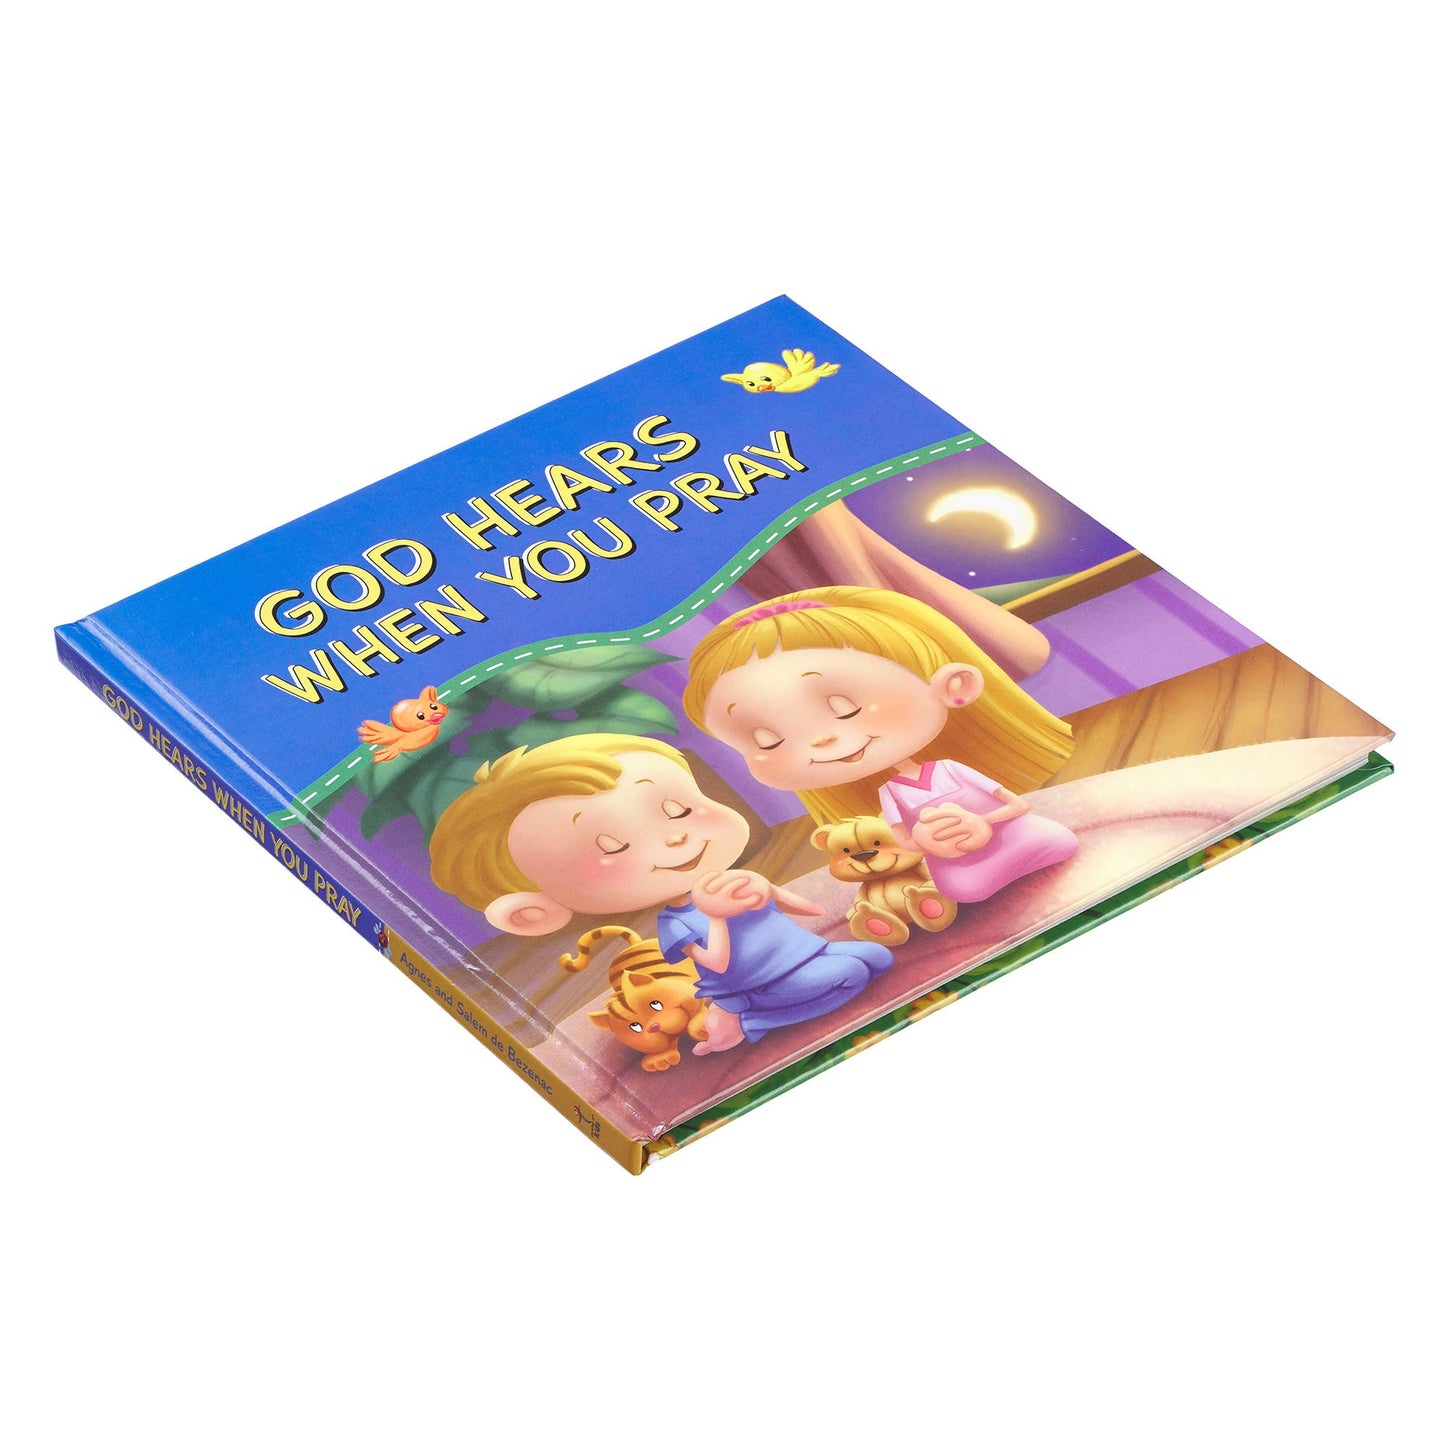 God Hears When You Pray